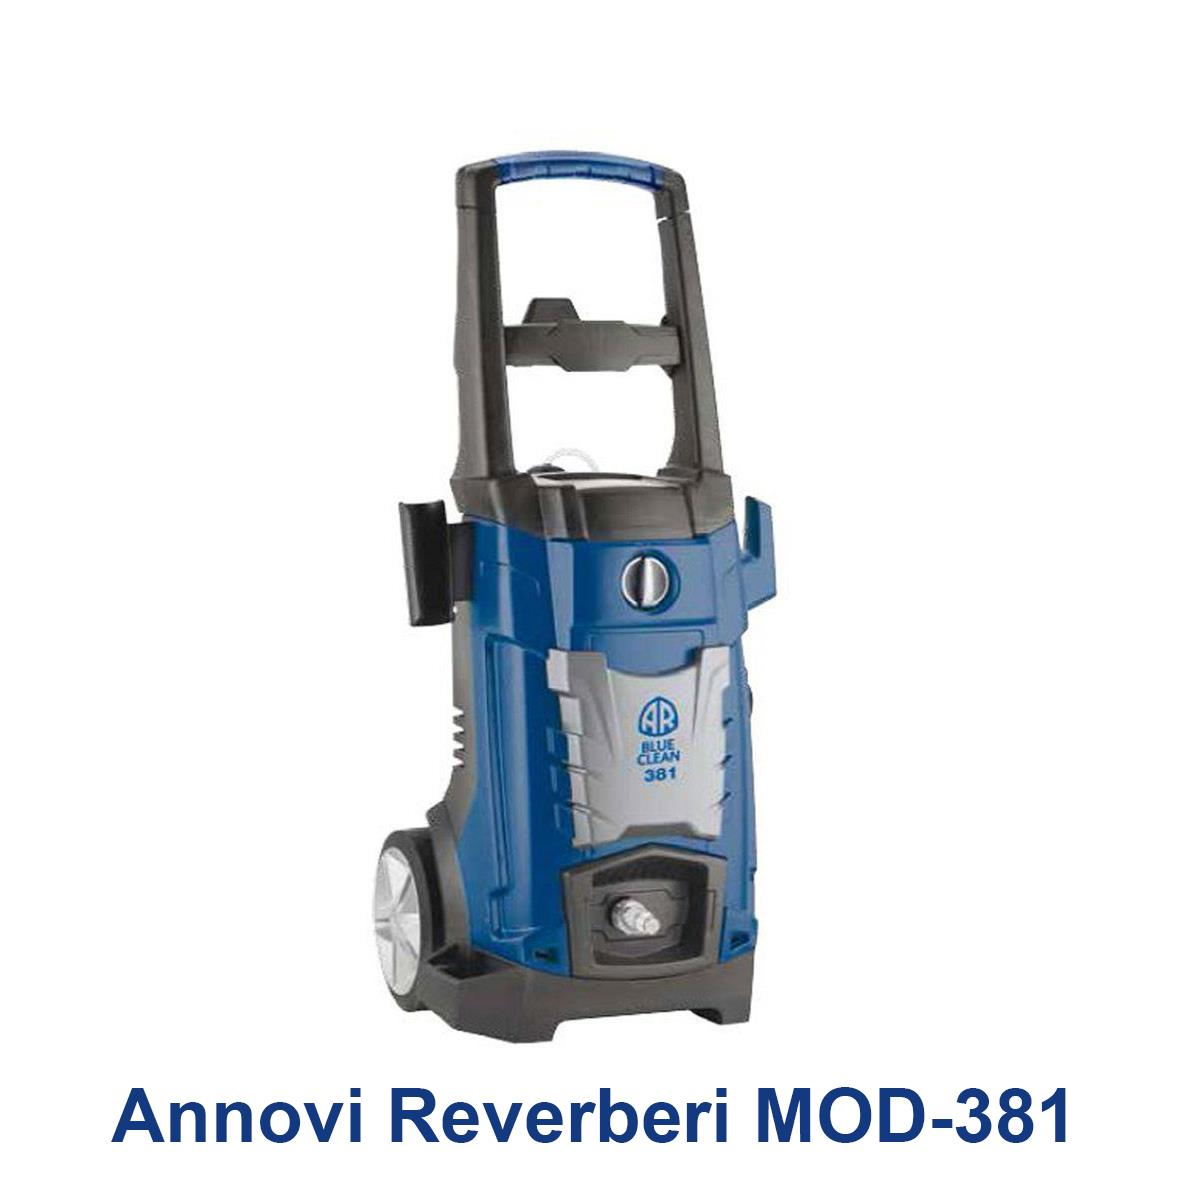 Annovi-Reverberi-MOD-381